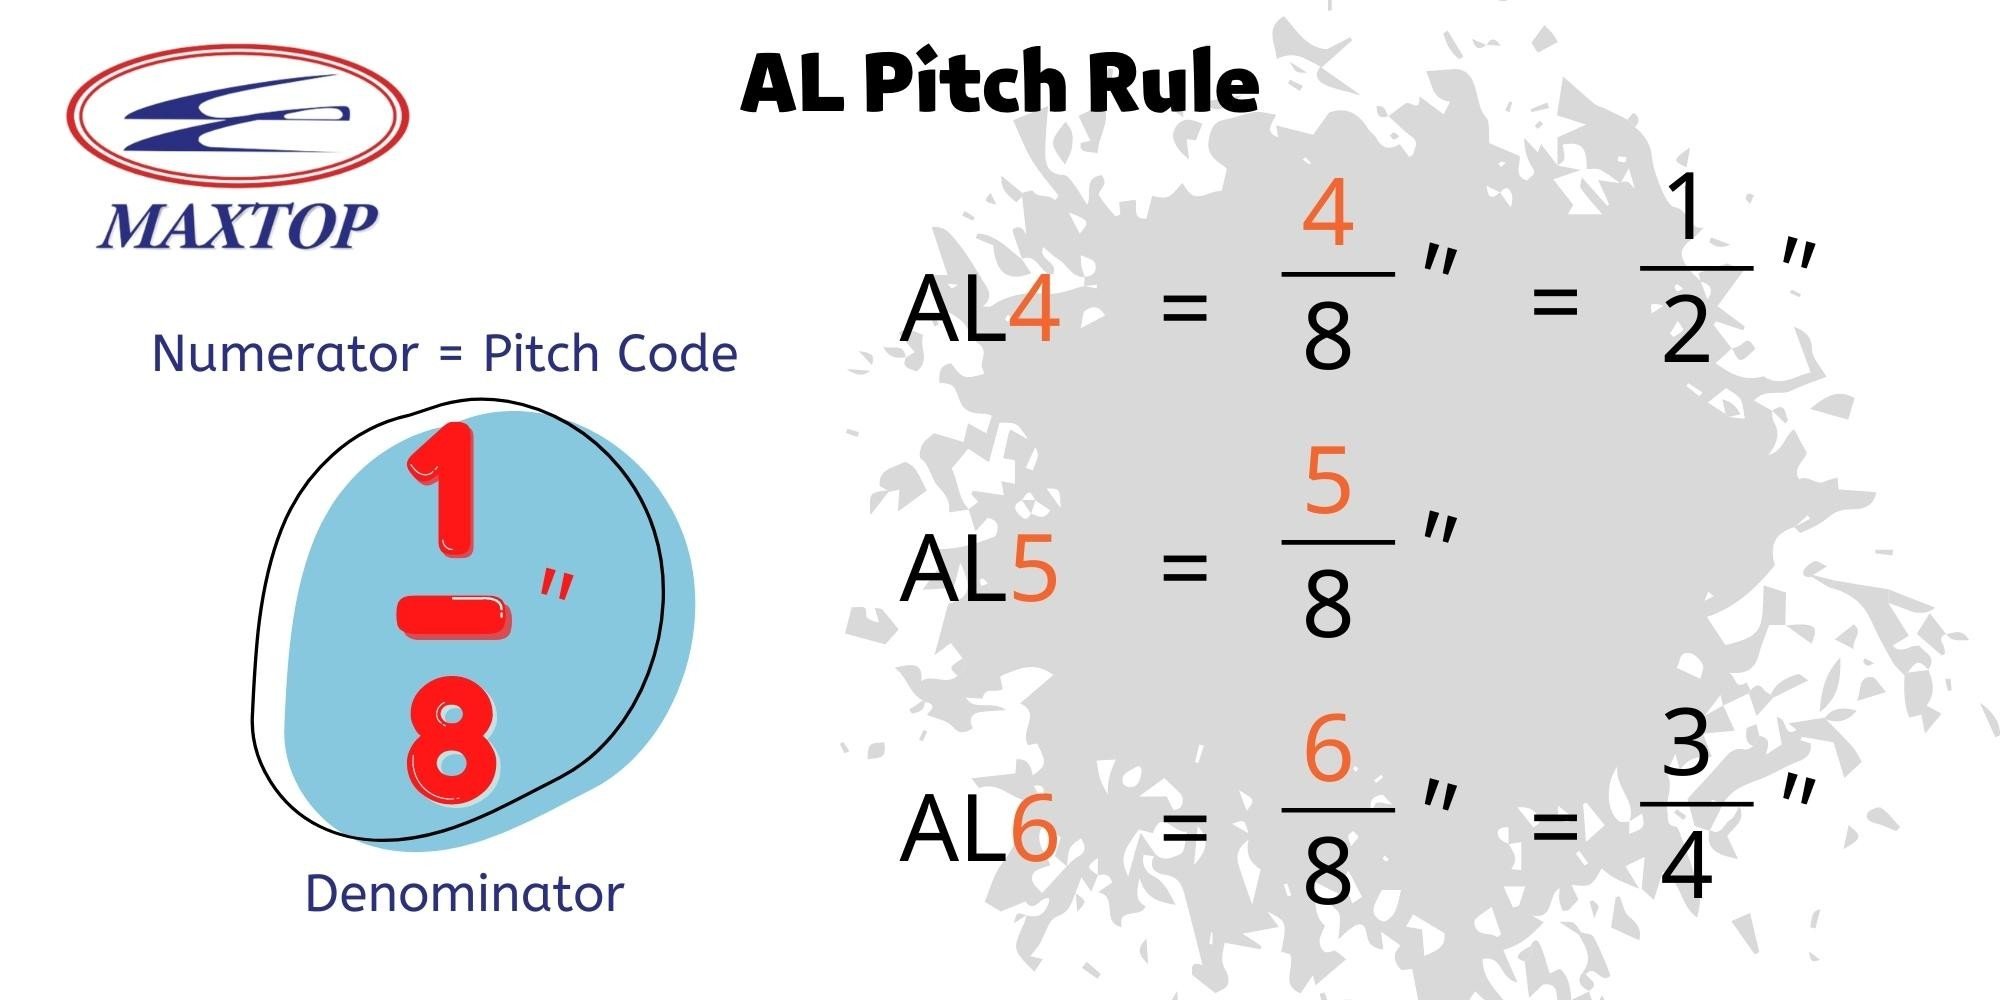 AL Pitch Rule